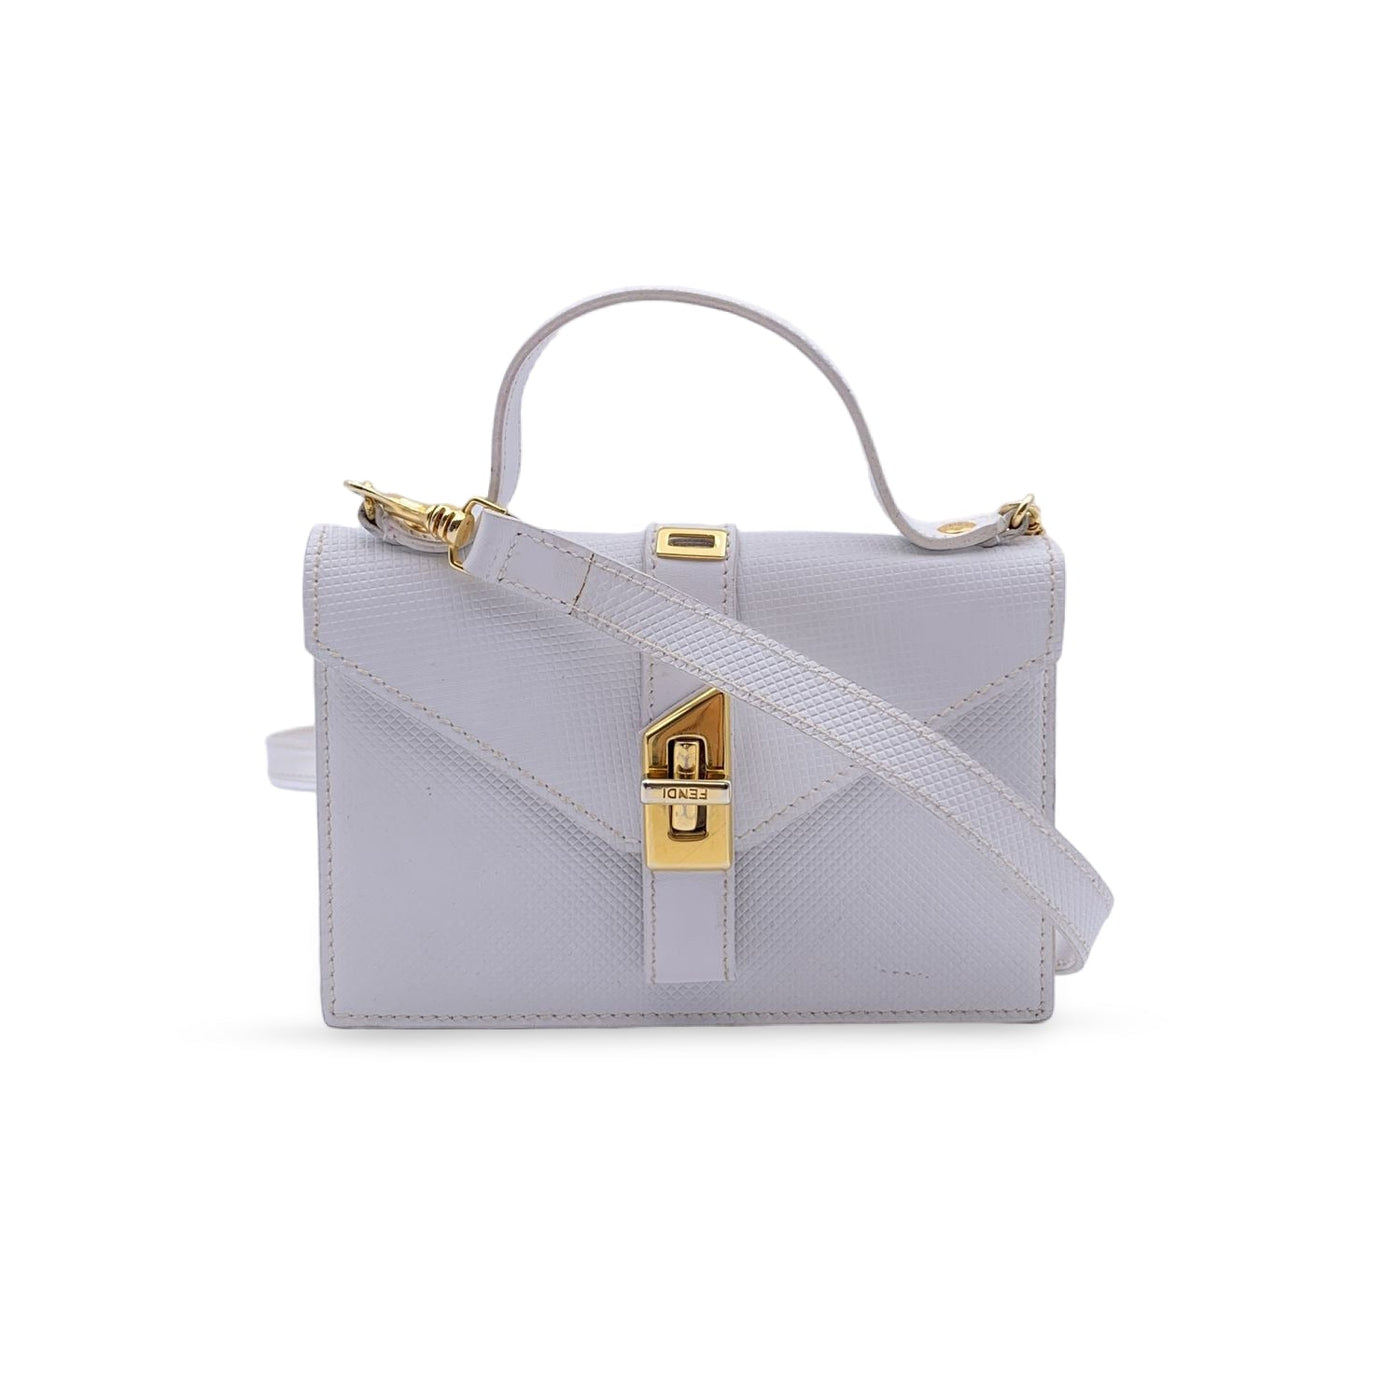 Fendi Vintage White Textured Leather Convertible Mini Handbag